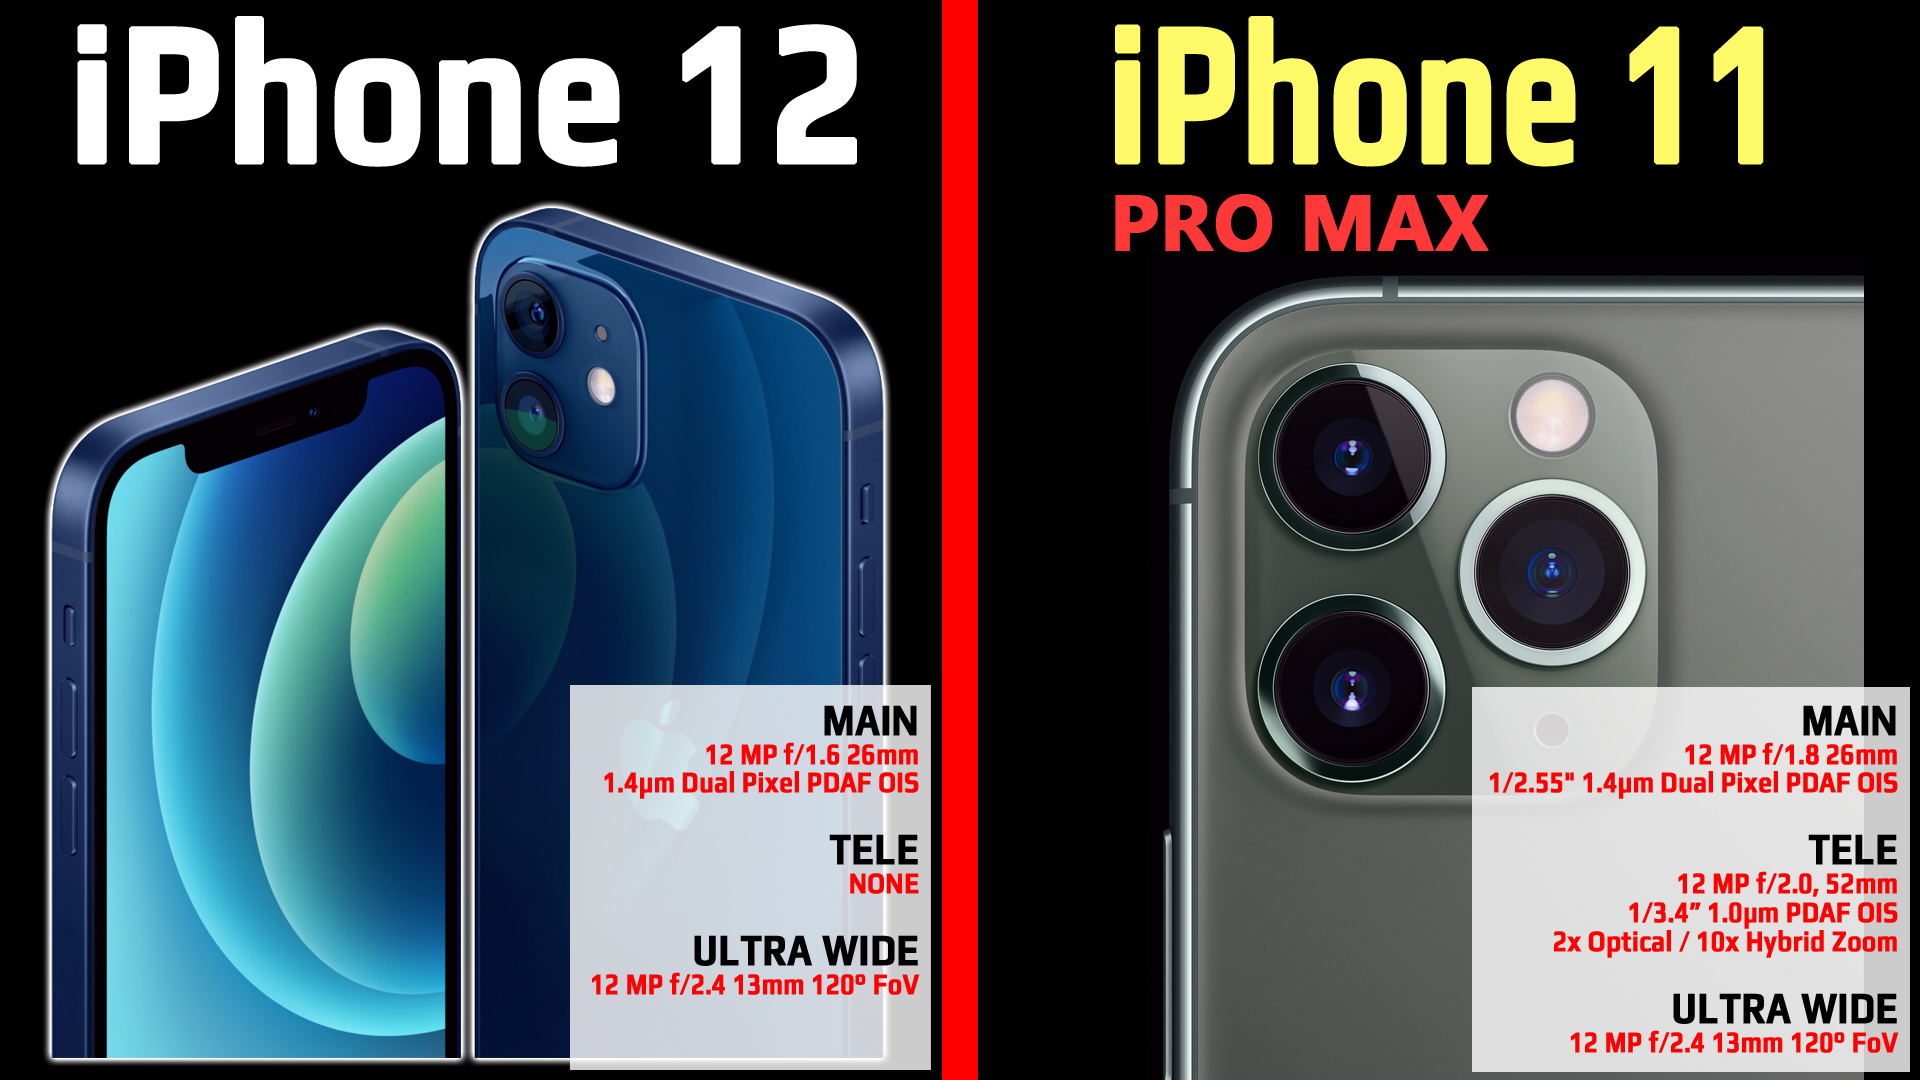 iPhone 12 vs iPhone 11 Pro Max Main Camera Test Photo